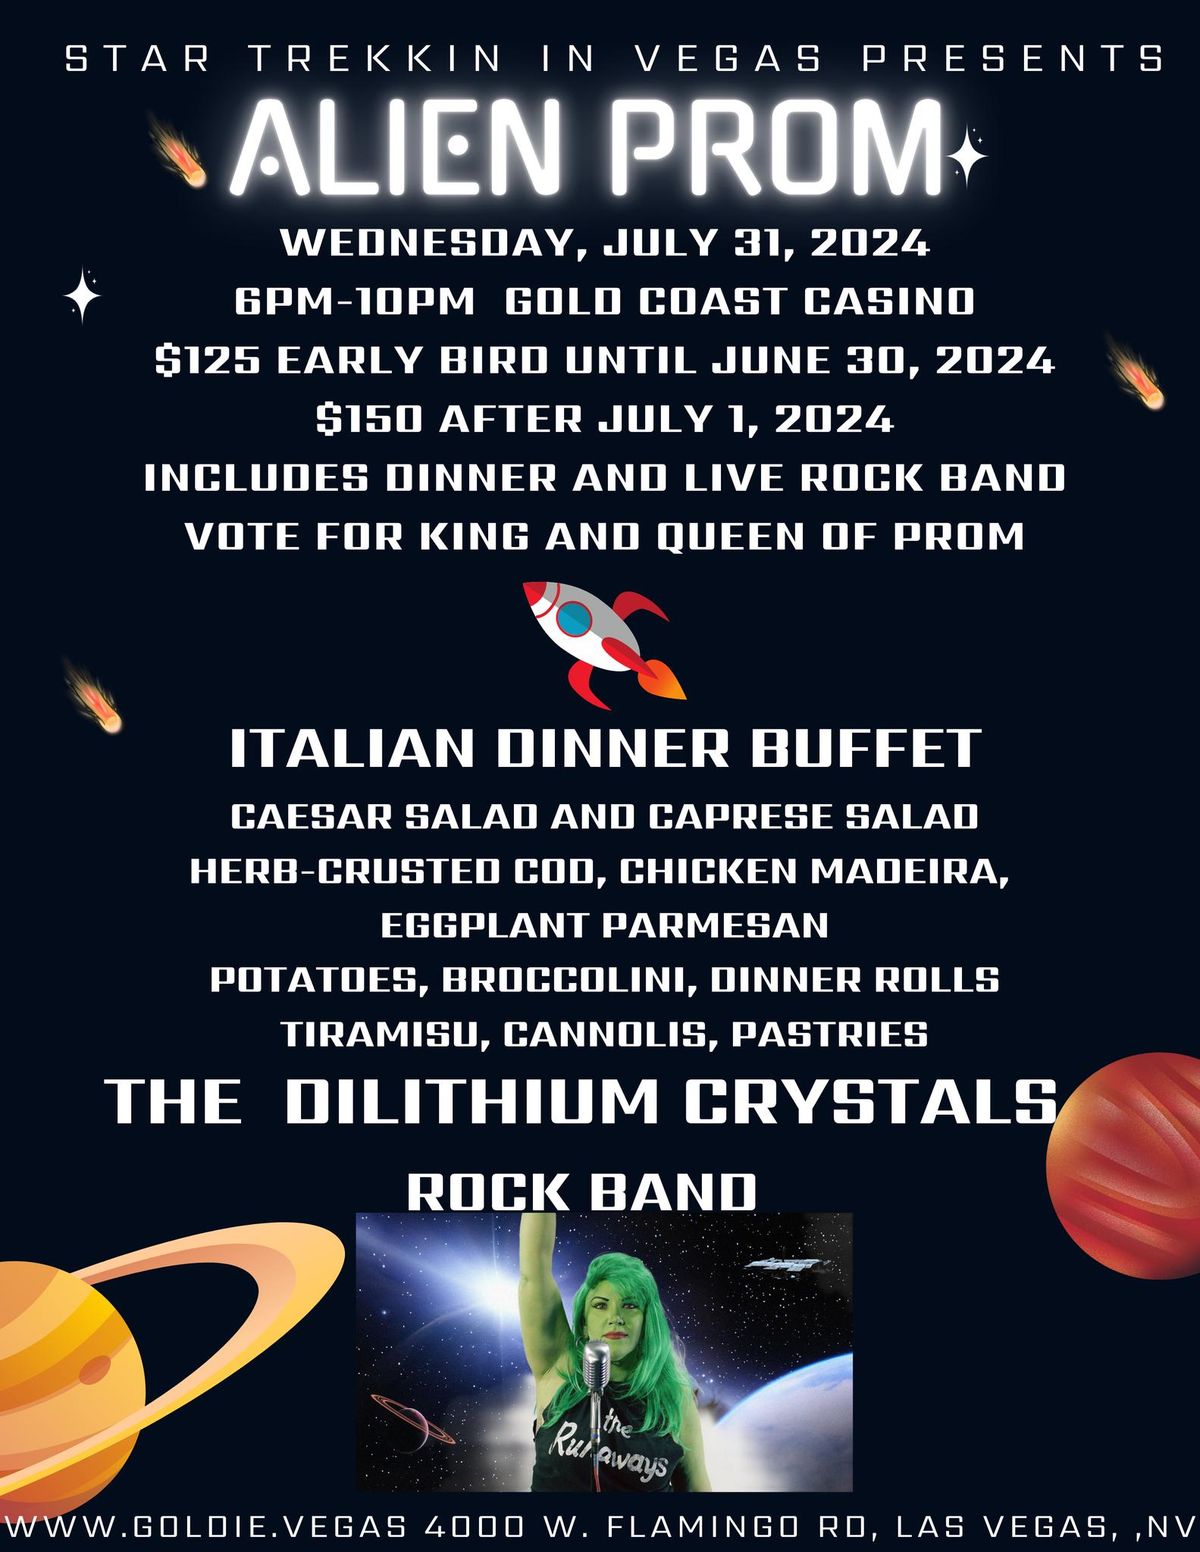 Alien Prom Presented by Star Trekking in Vegas